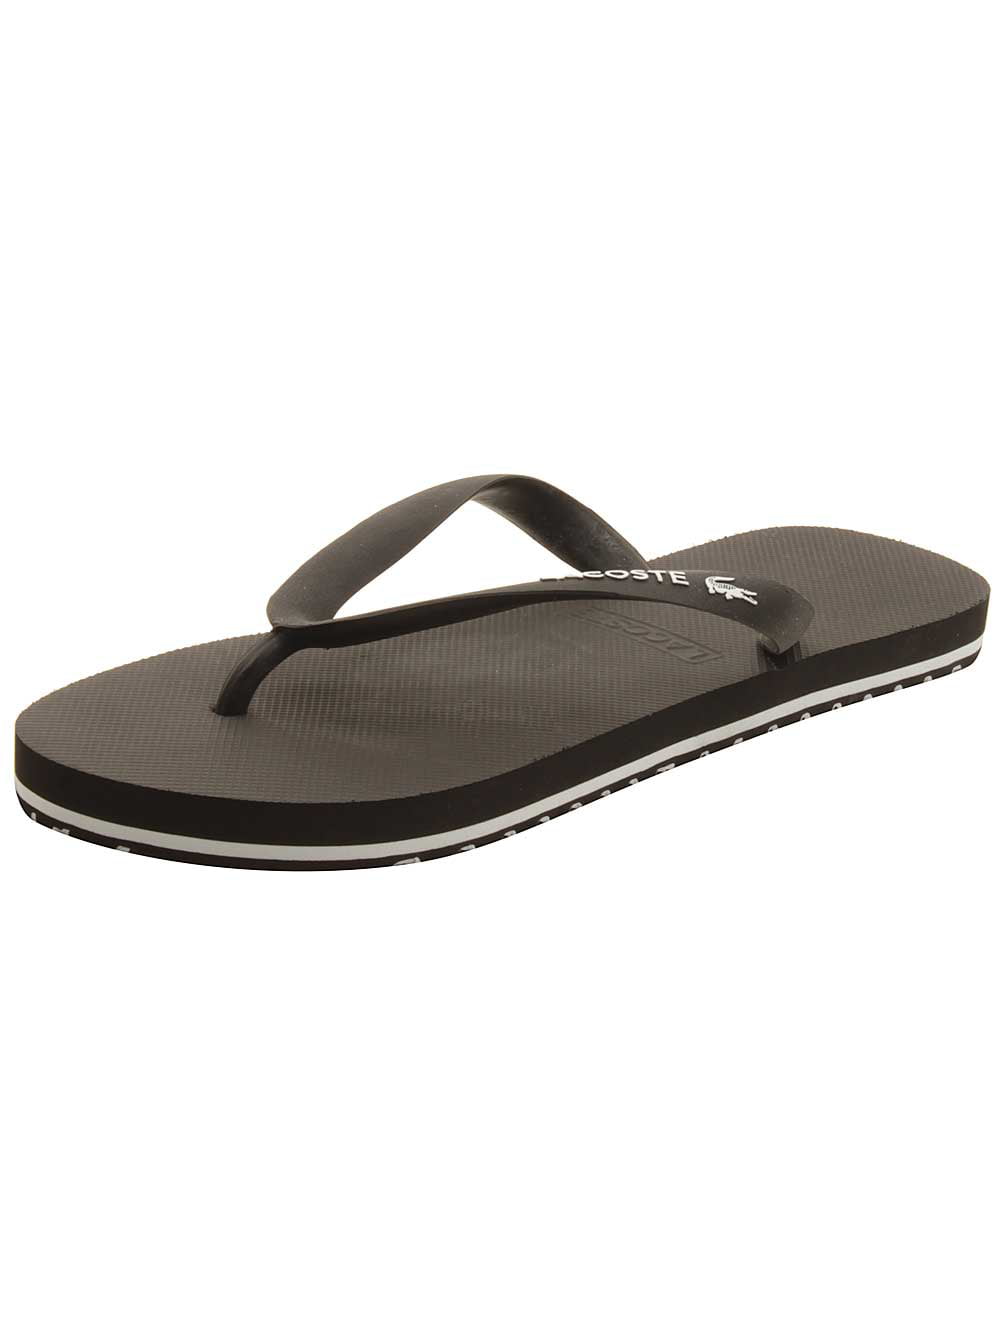 Lacoste Mens Nosara LCR Flip Flops in Black/White - Walmart.com